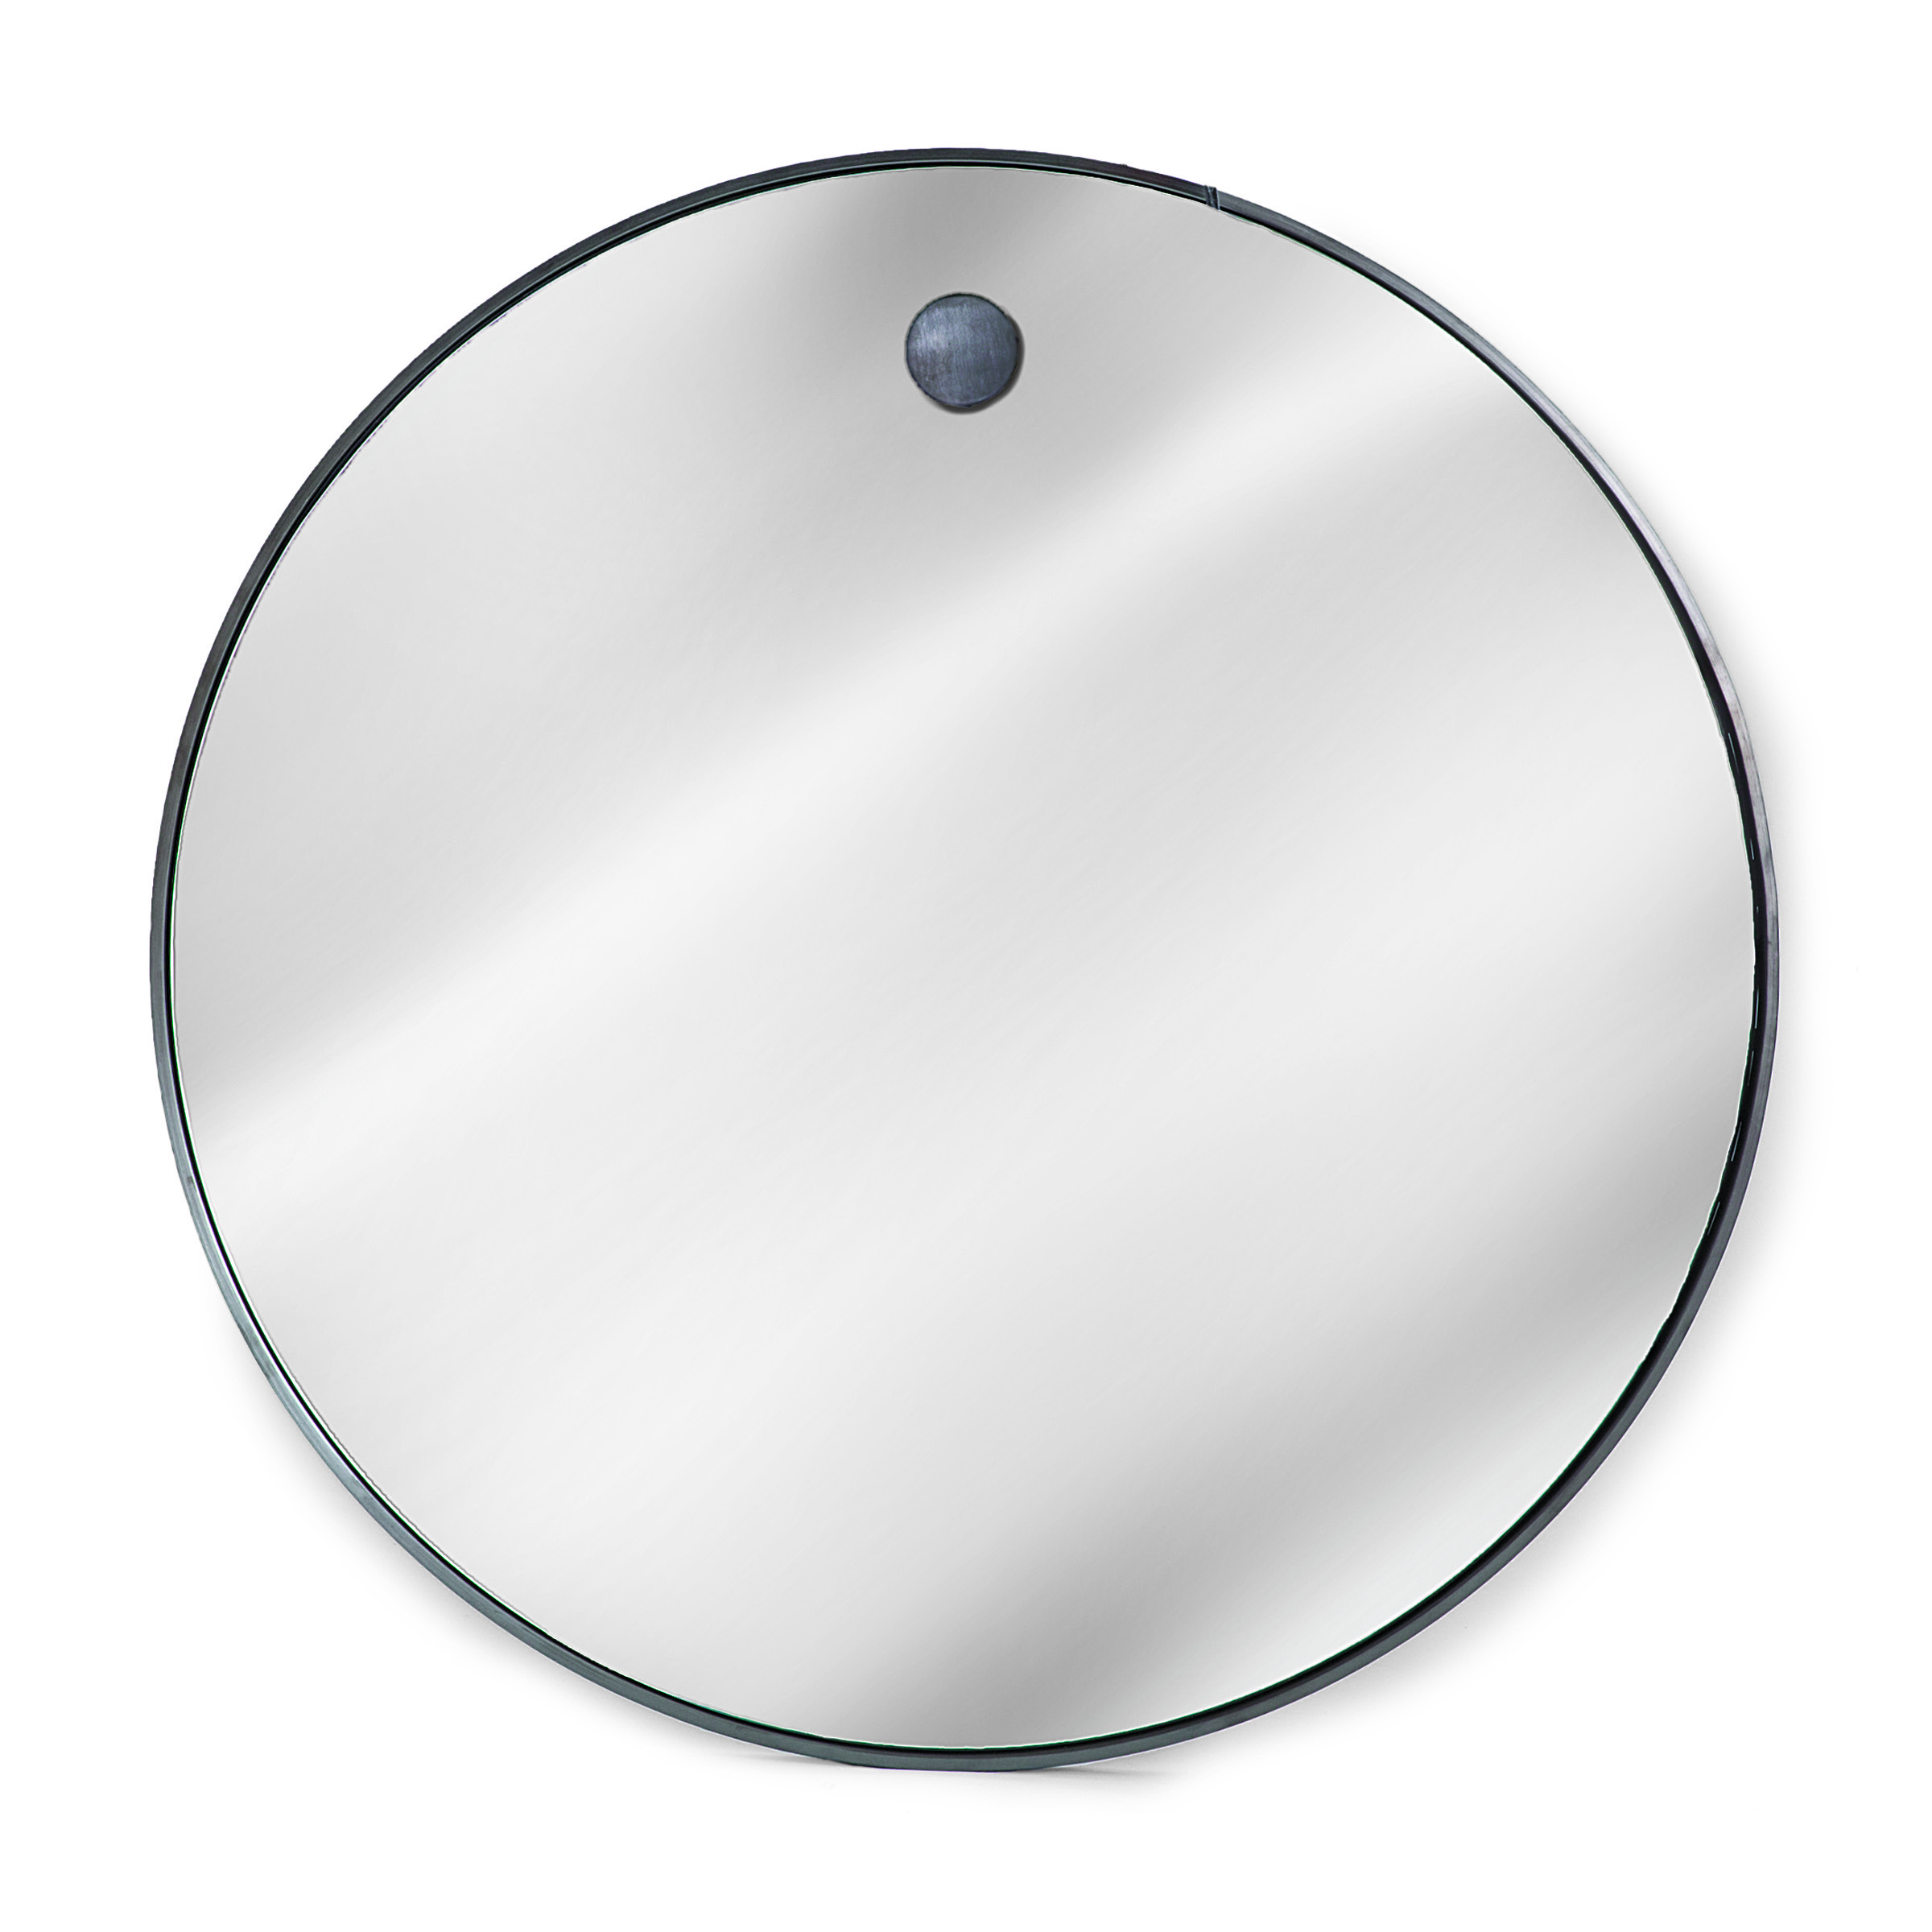 Hanging circular mirror from Regina Andrew Design